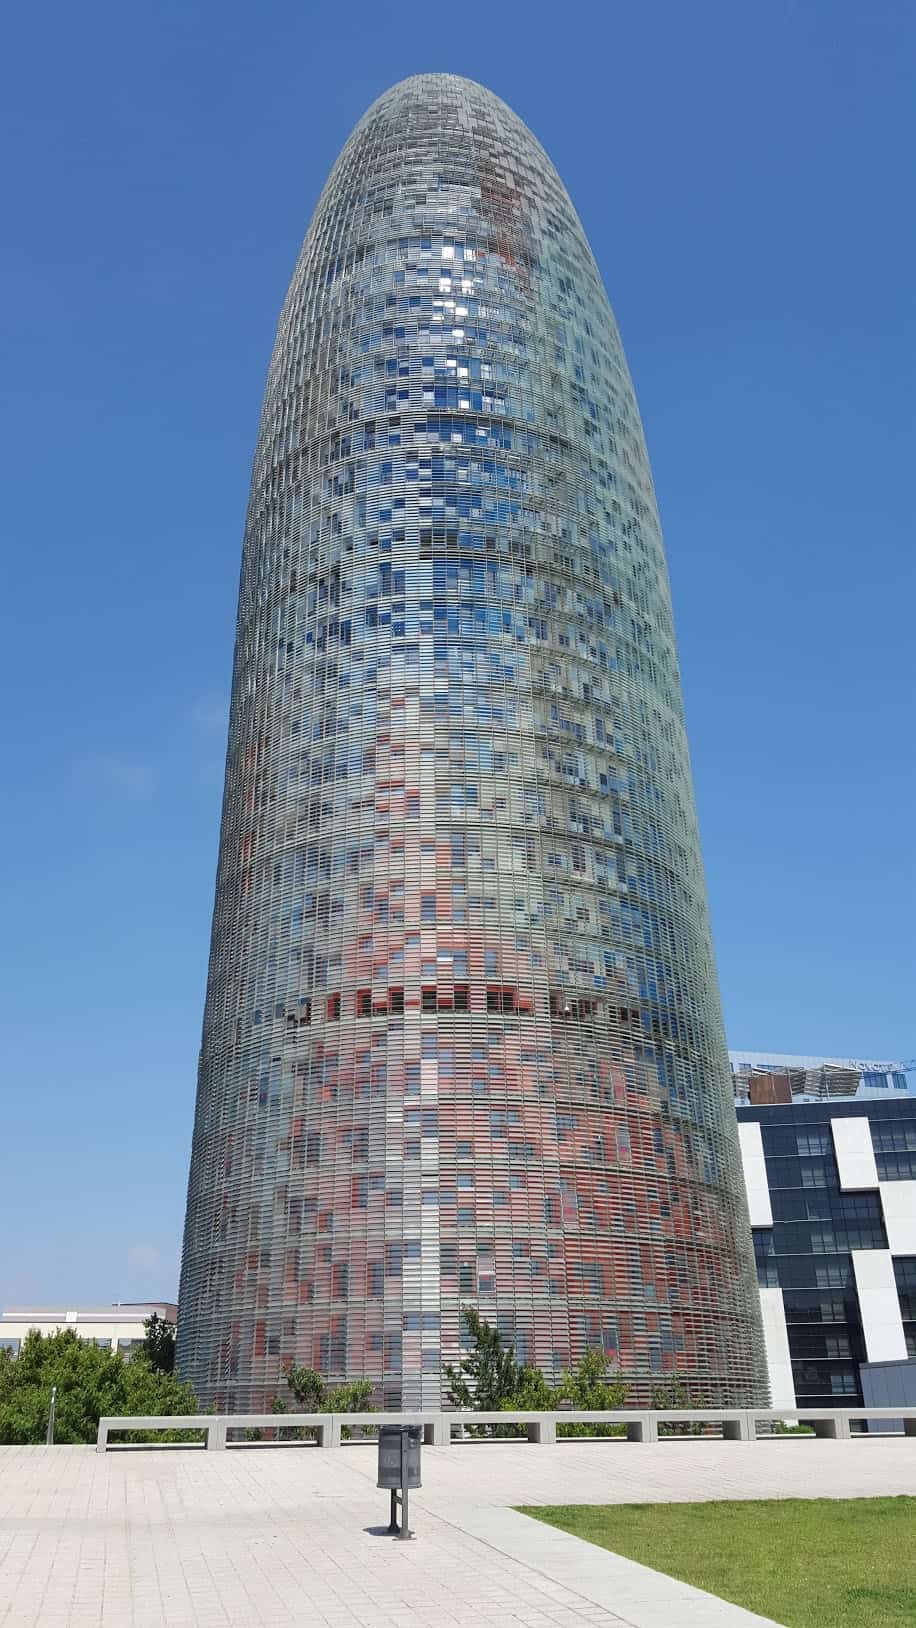 Башня Агбар - Agbar Tower - достопримечательности Барселоны